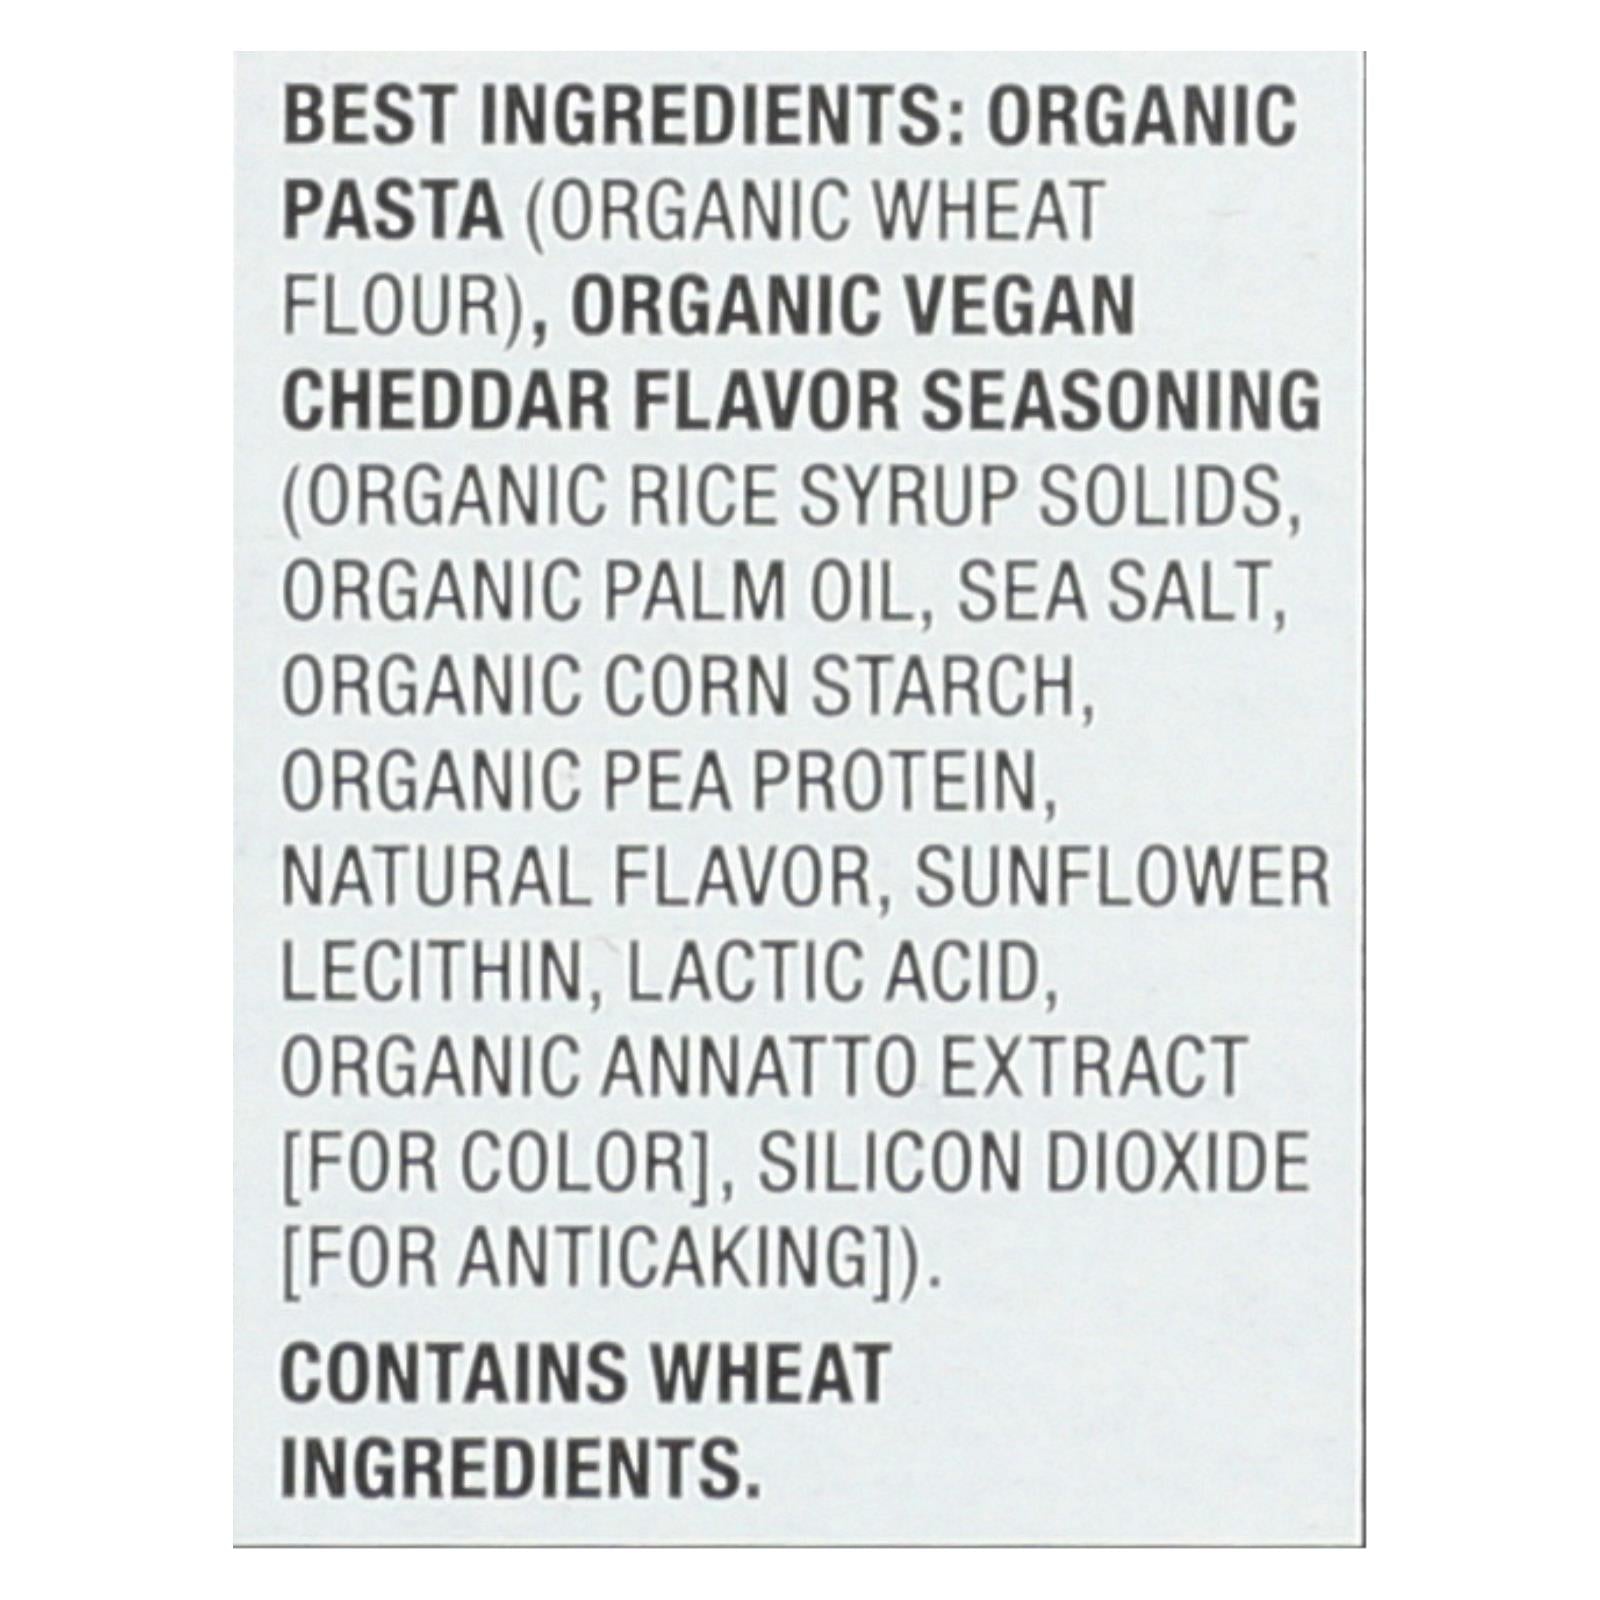 Annie's Homegrown Organic Macaroni & Cheese - Vegan Cheddar Flavored - Case Of 12 - 6 Oz